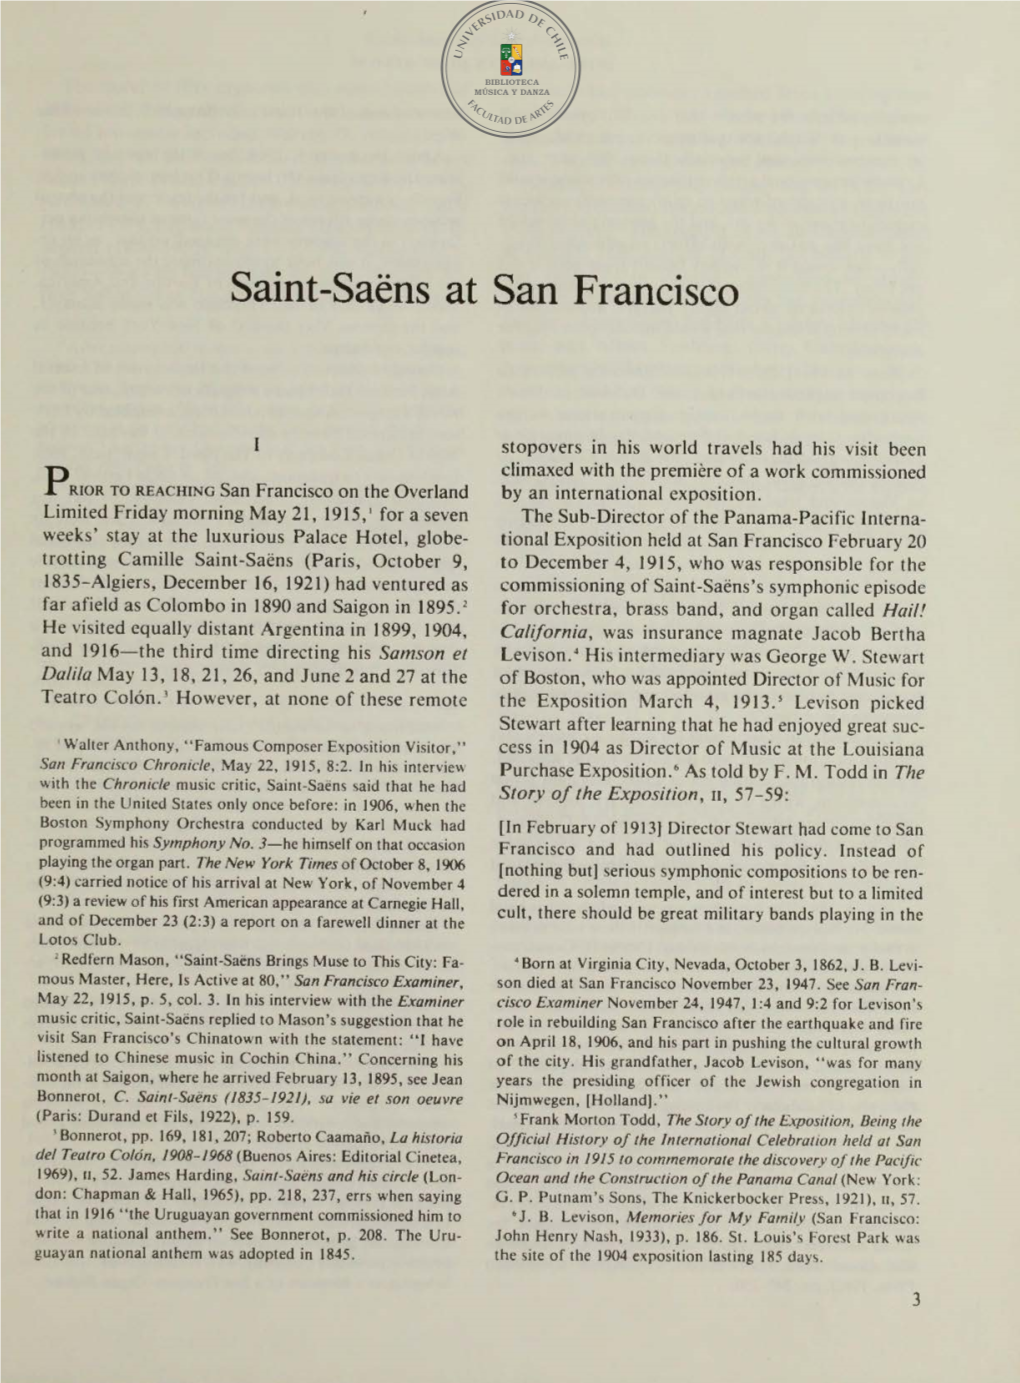 Saint-Saens at San Francisco